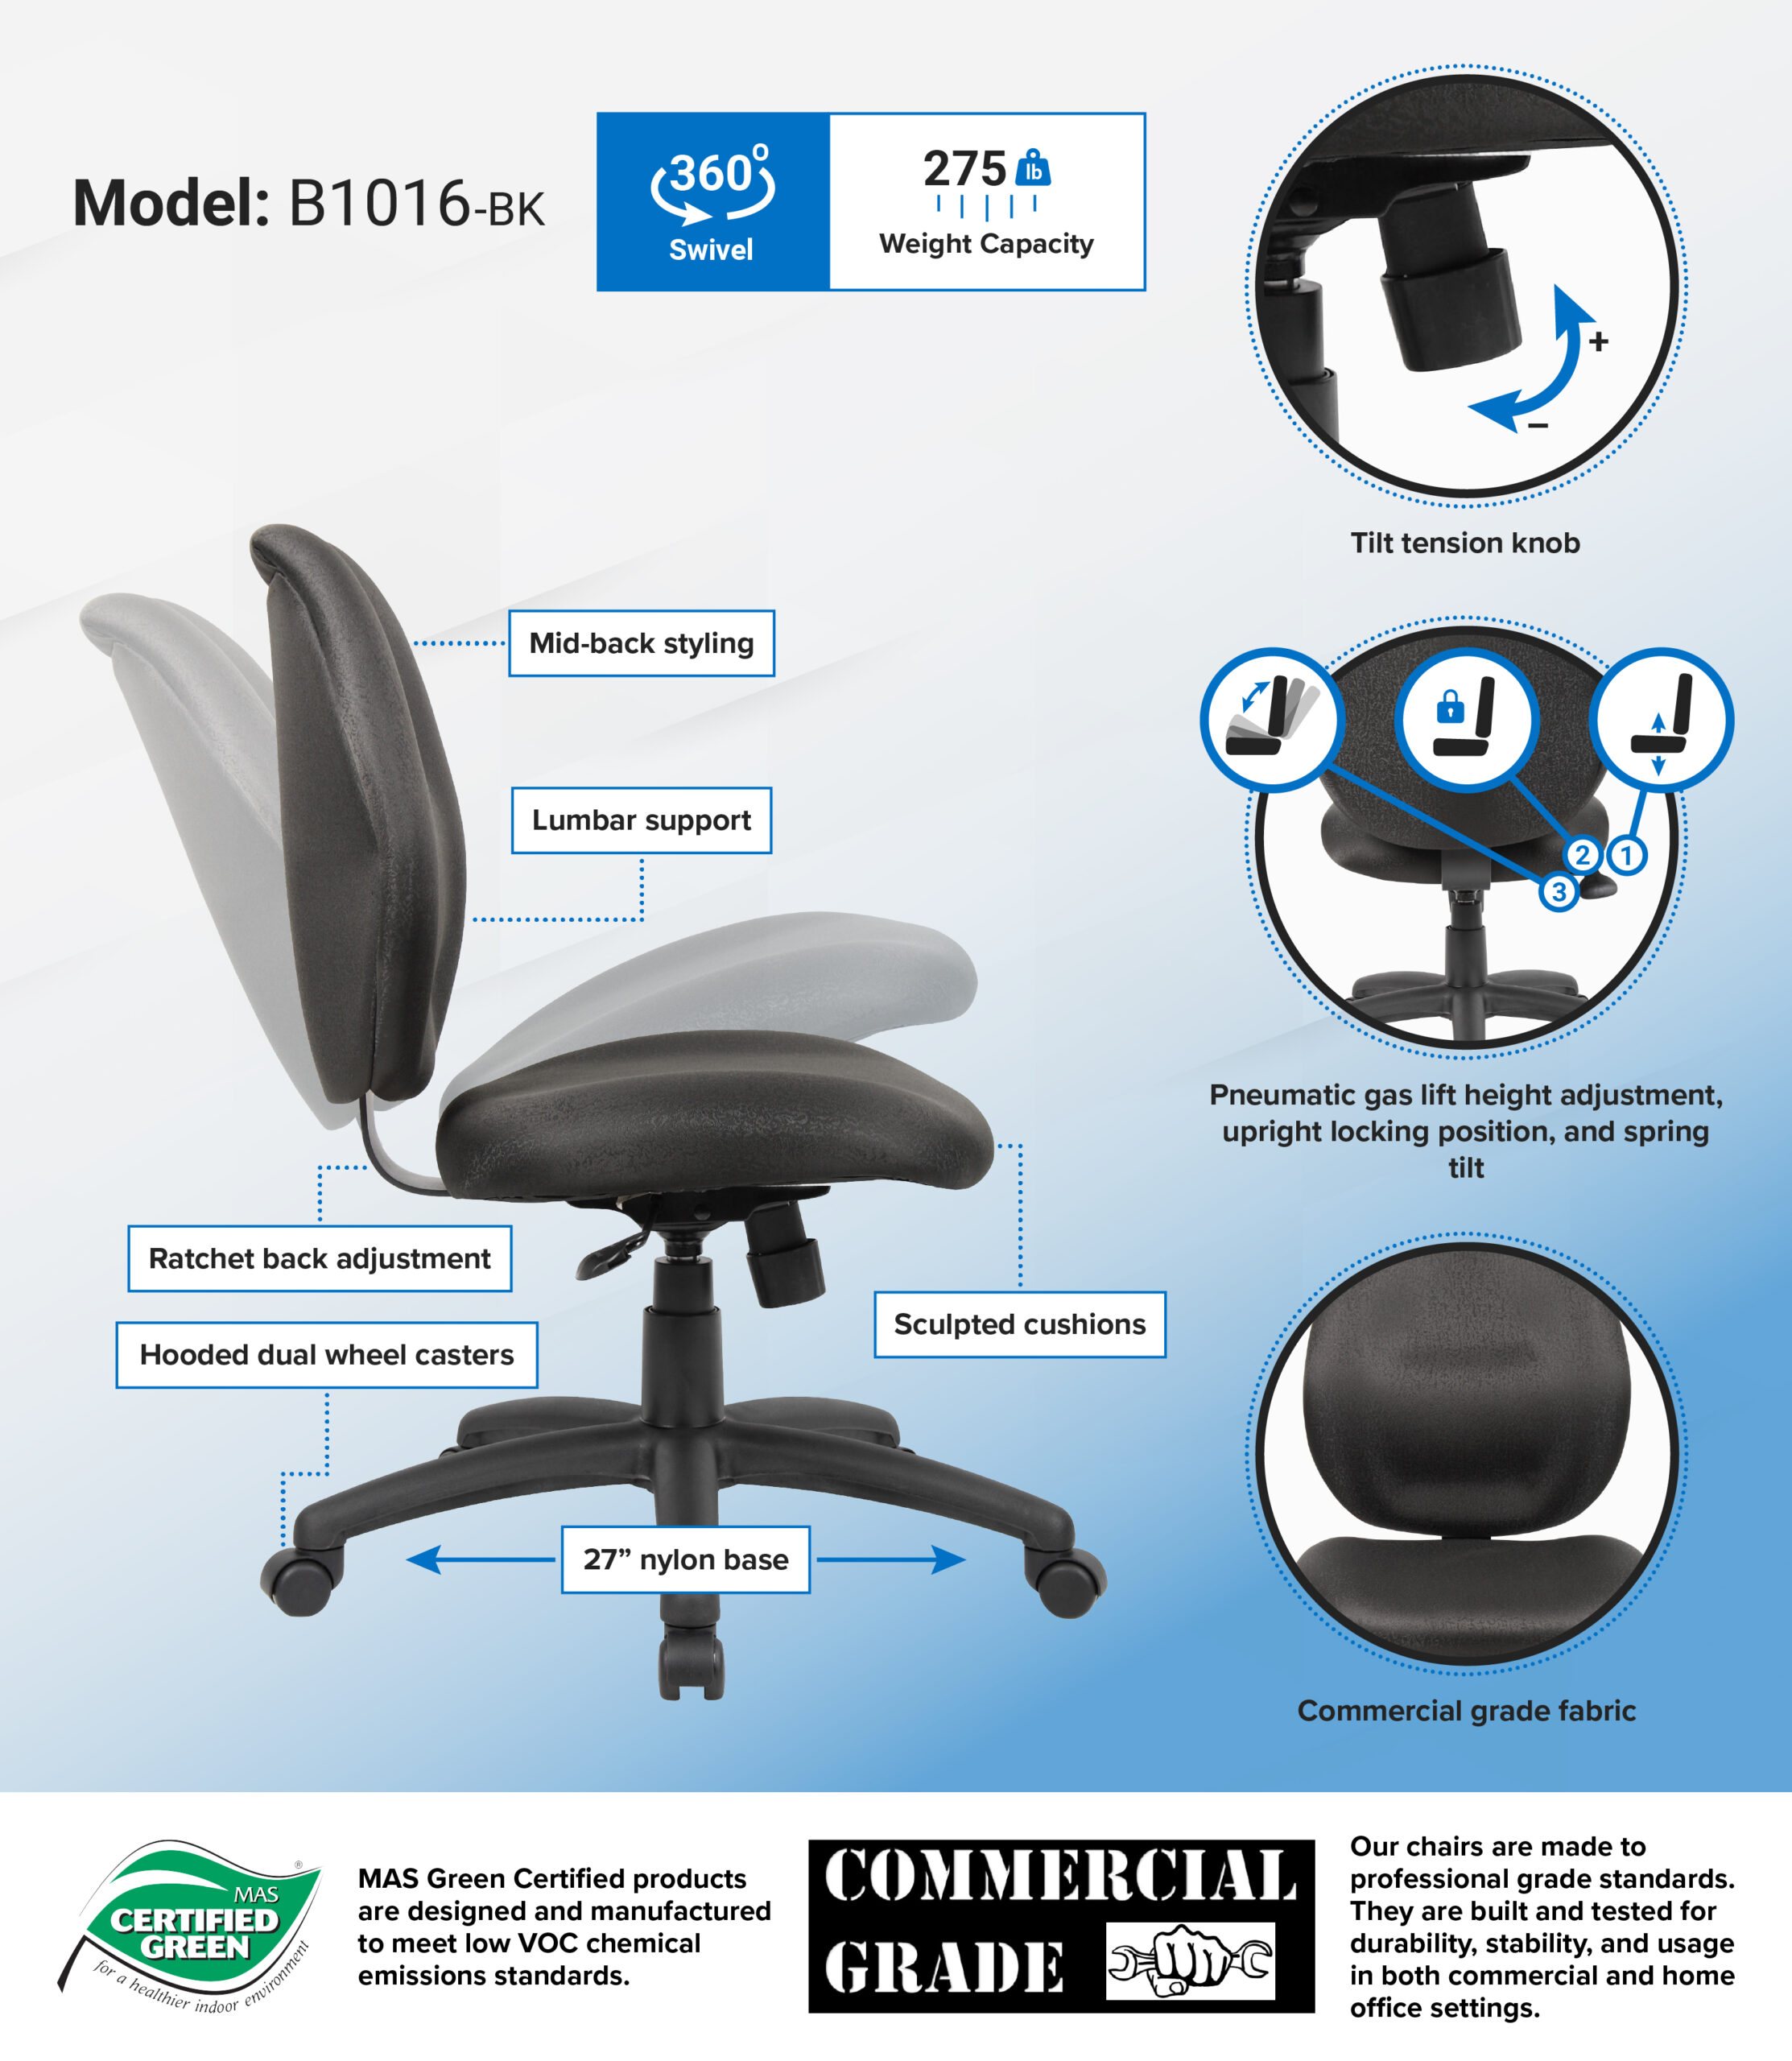 Slipcover Office Chair Back Cushion Wheels Mechanism Office Chair